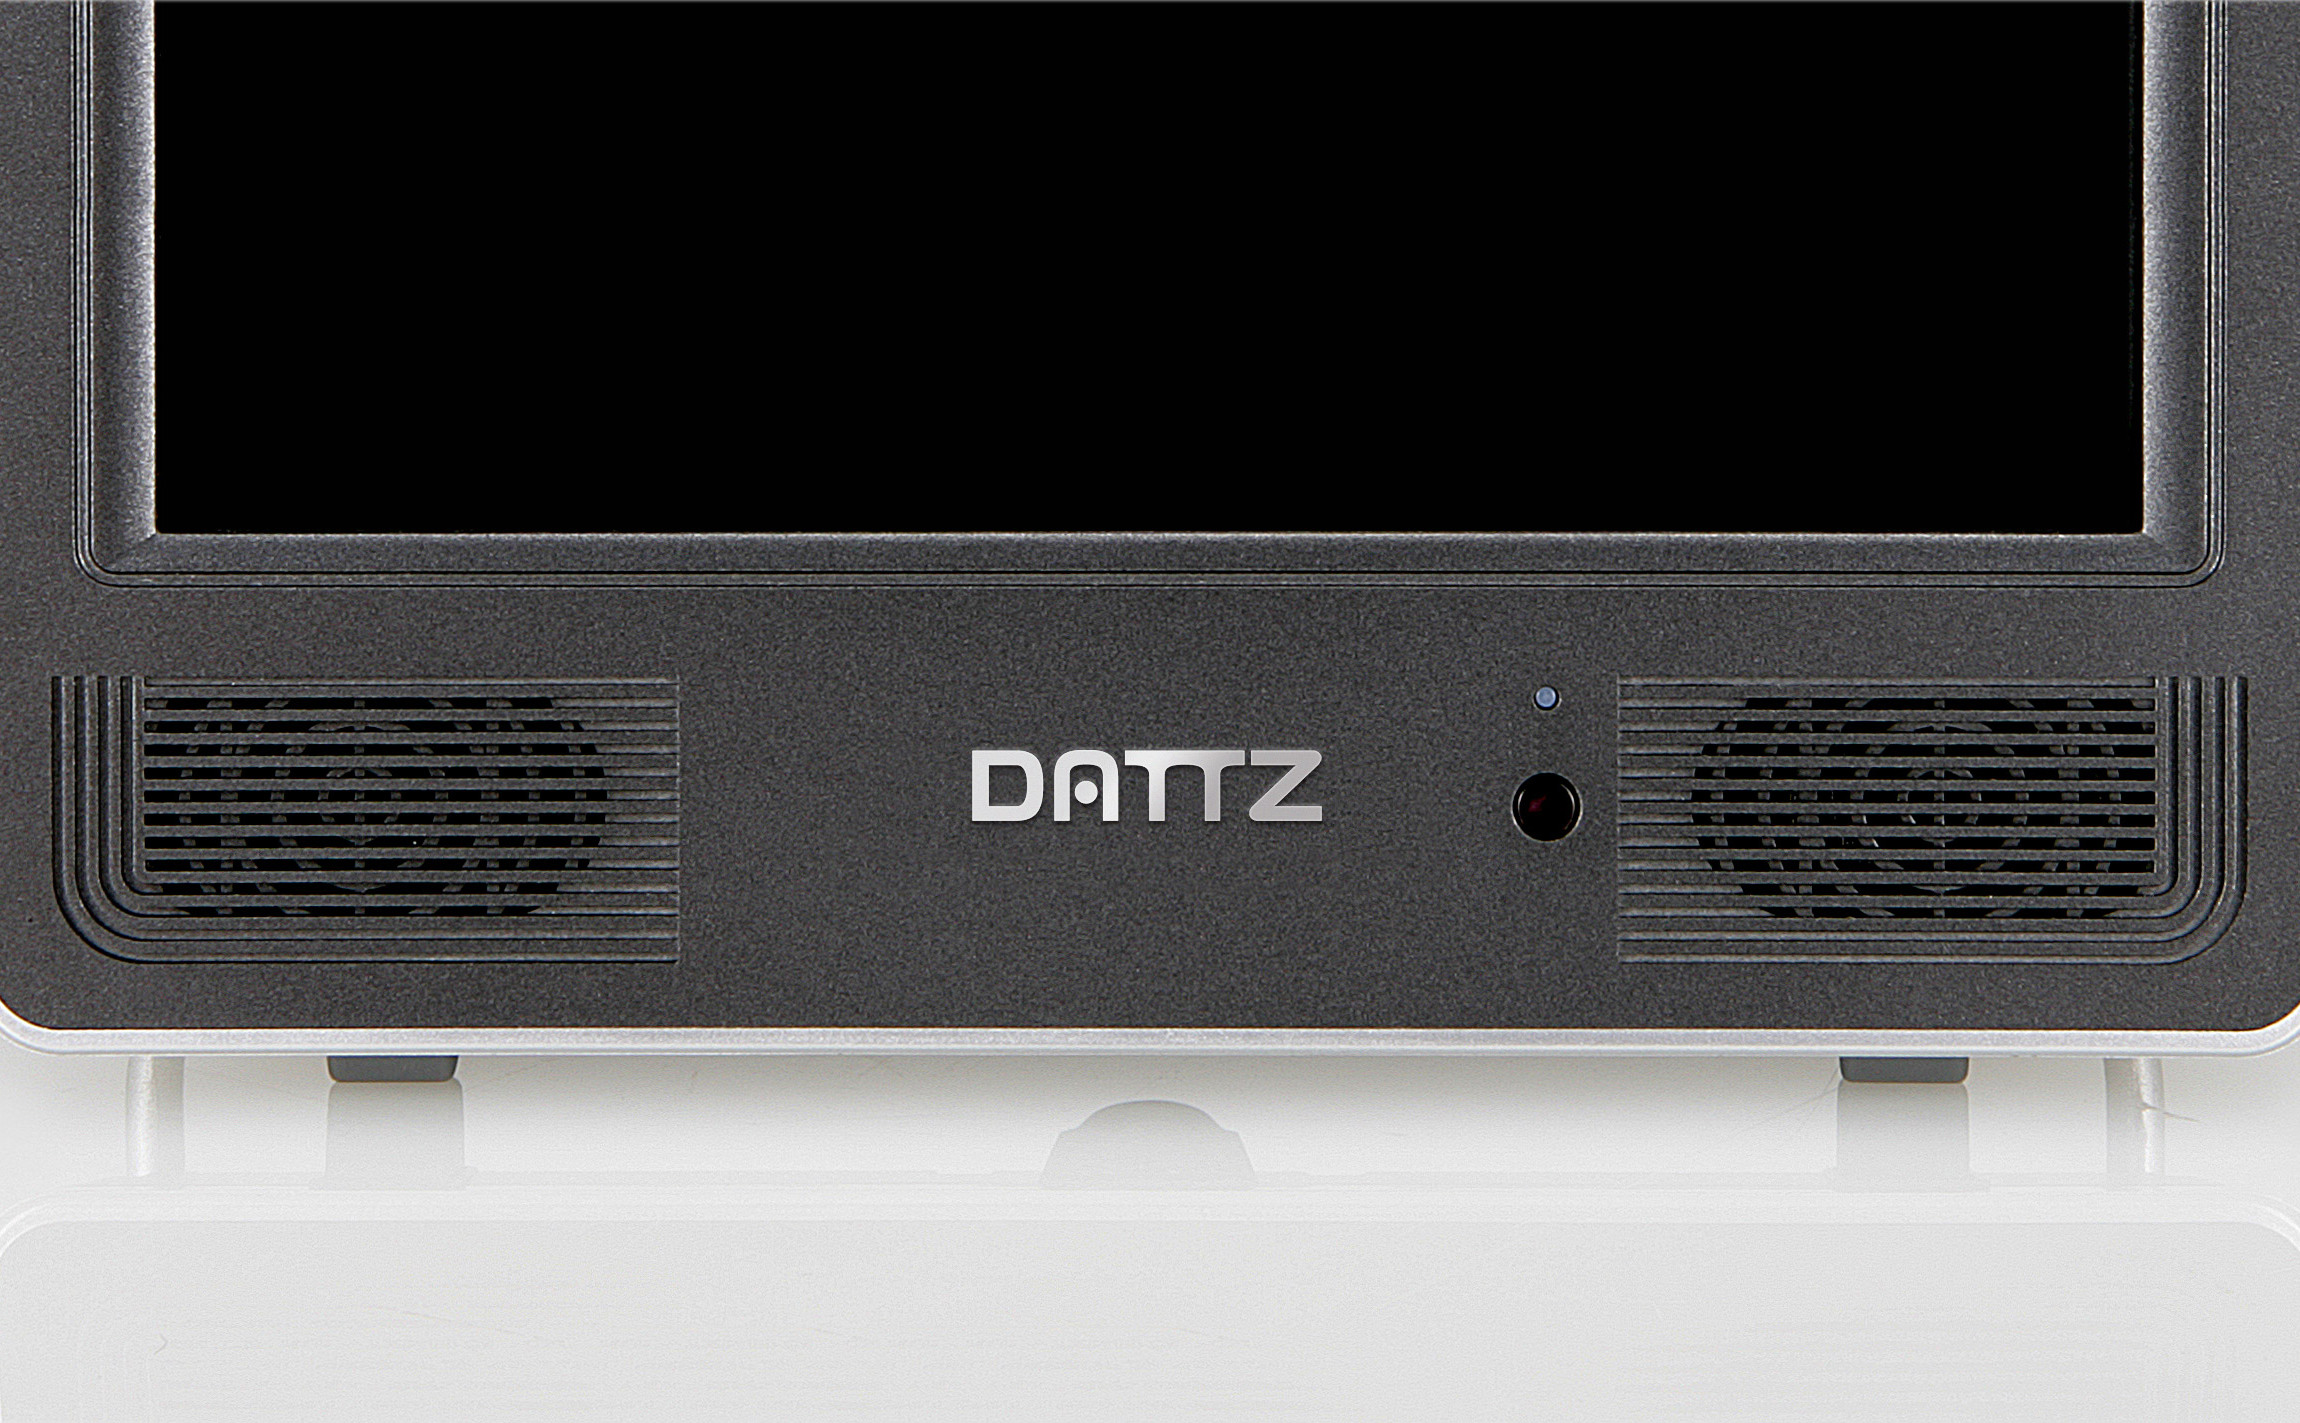 DATTZ DM Technology Branding & Identity